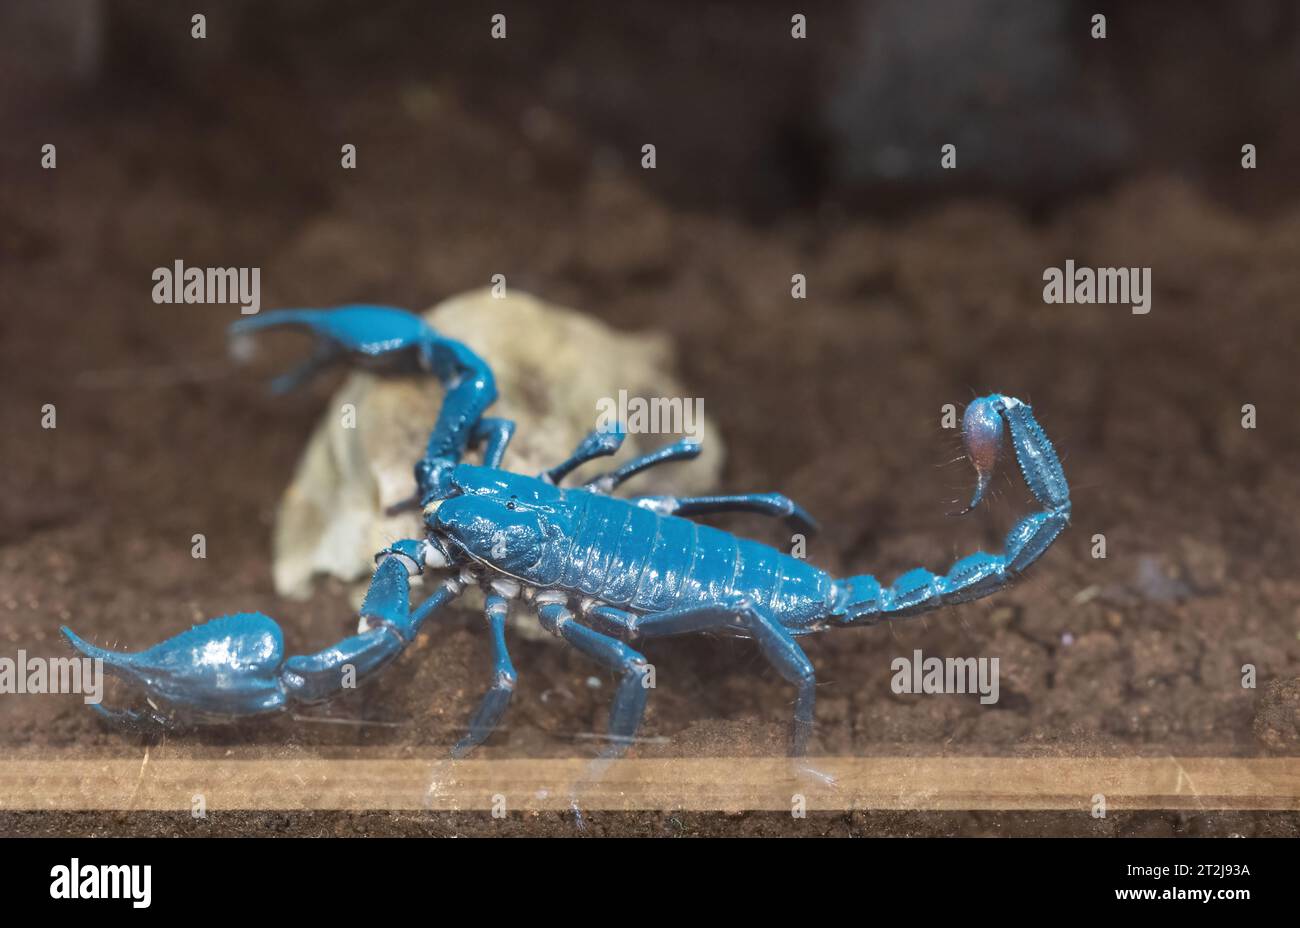 Close-up of Emperor Scorpion under blacklight. The Emperor Scorpion glows blue under blacklight. Stock Photo